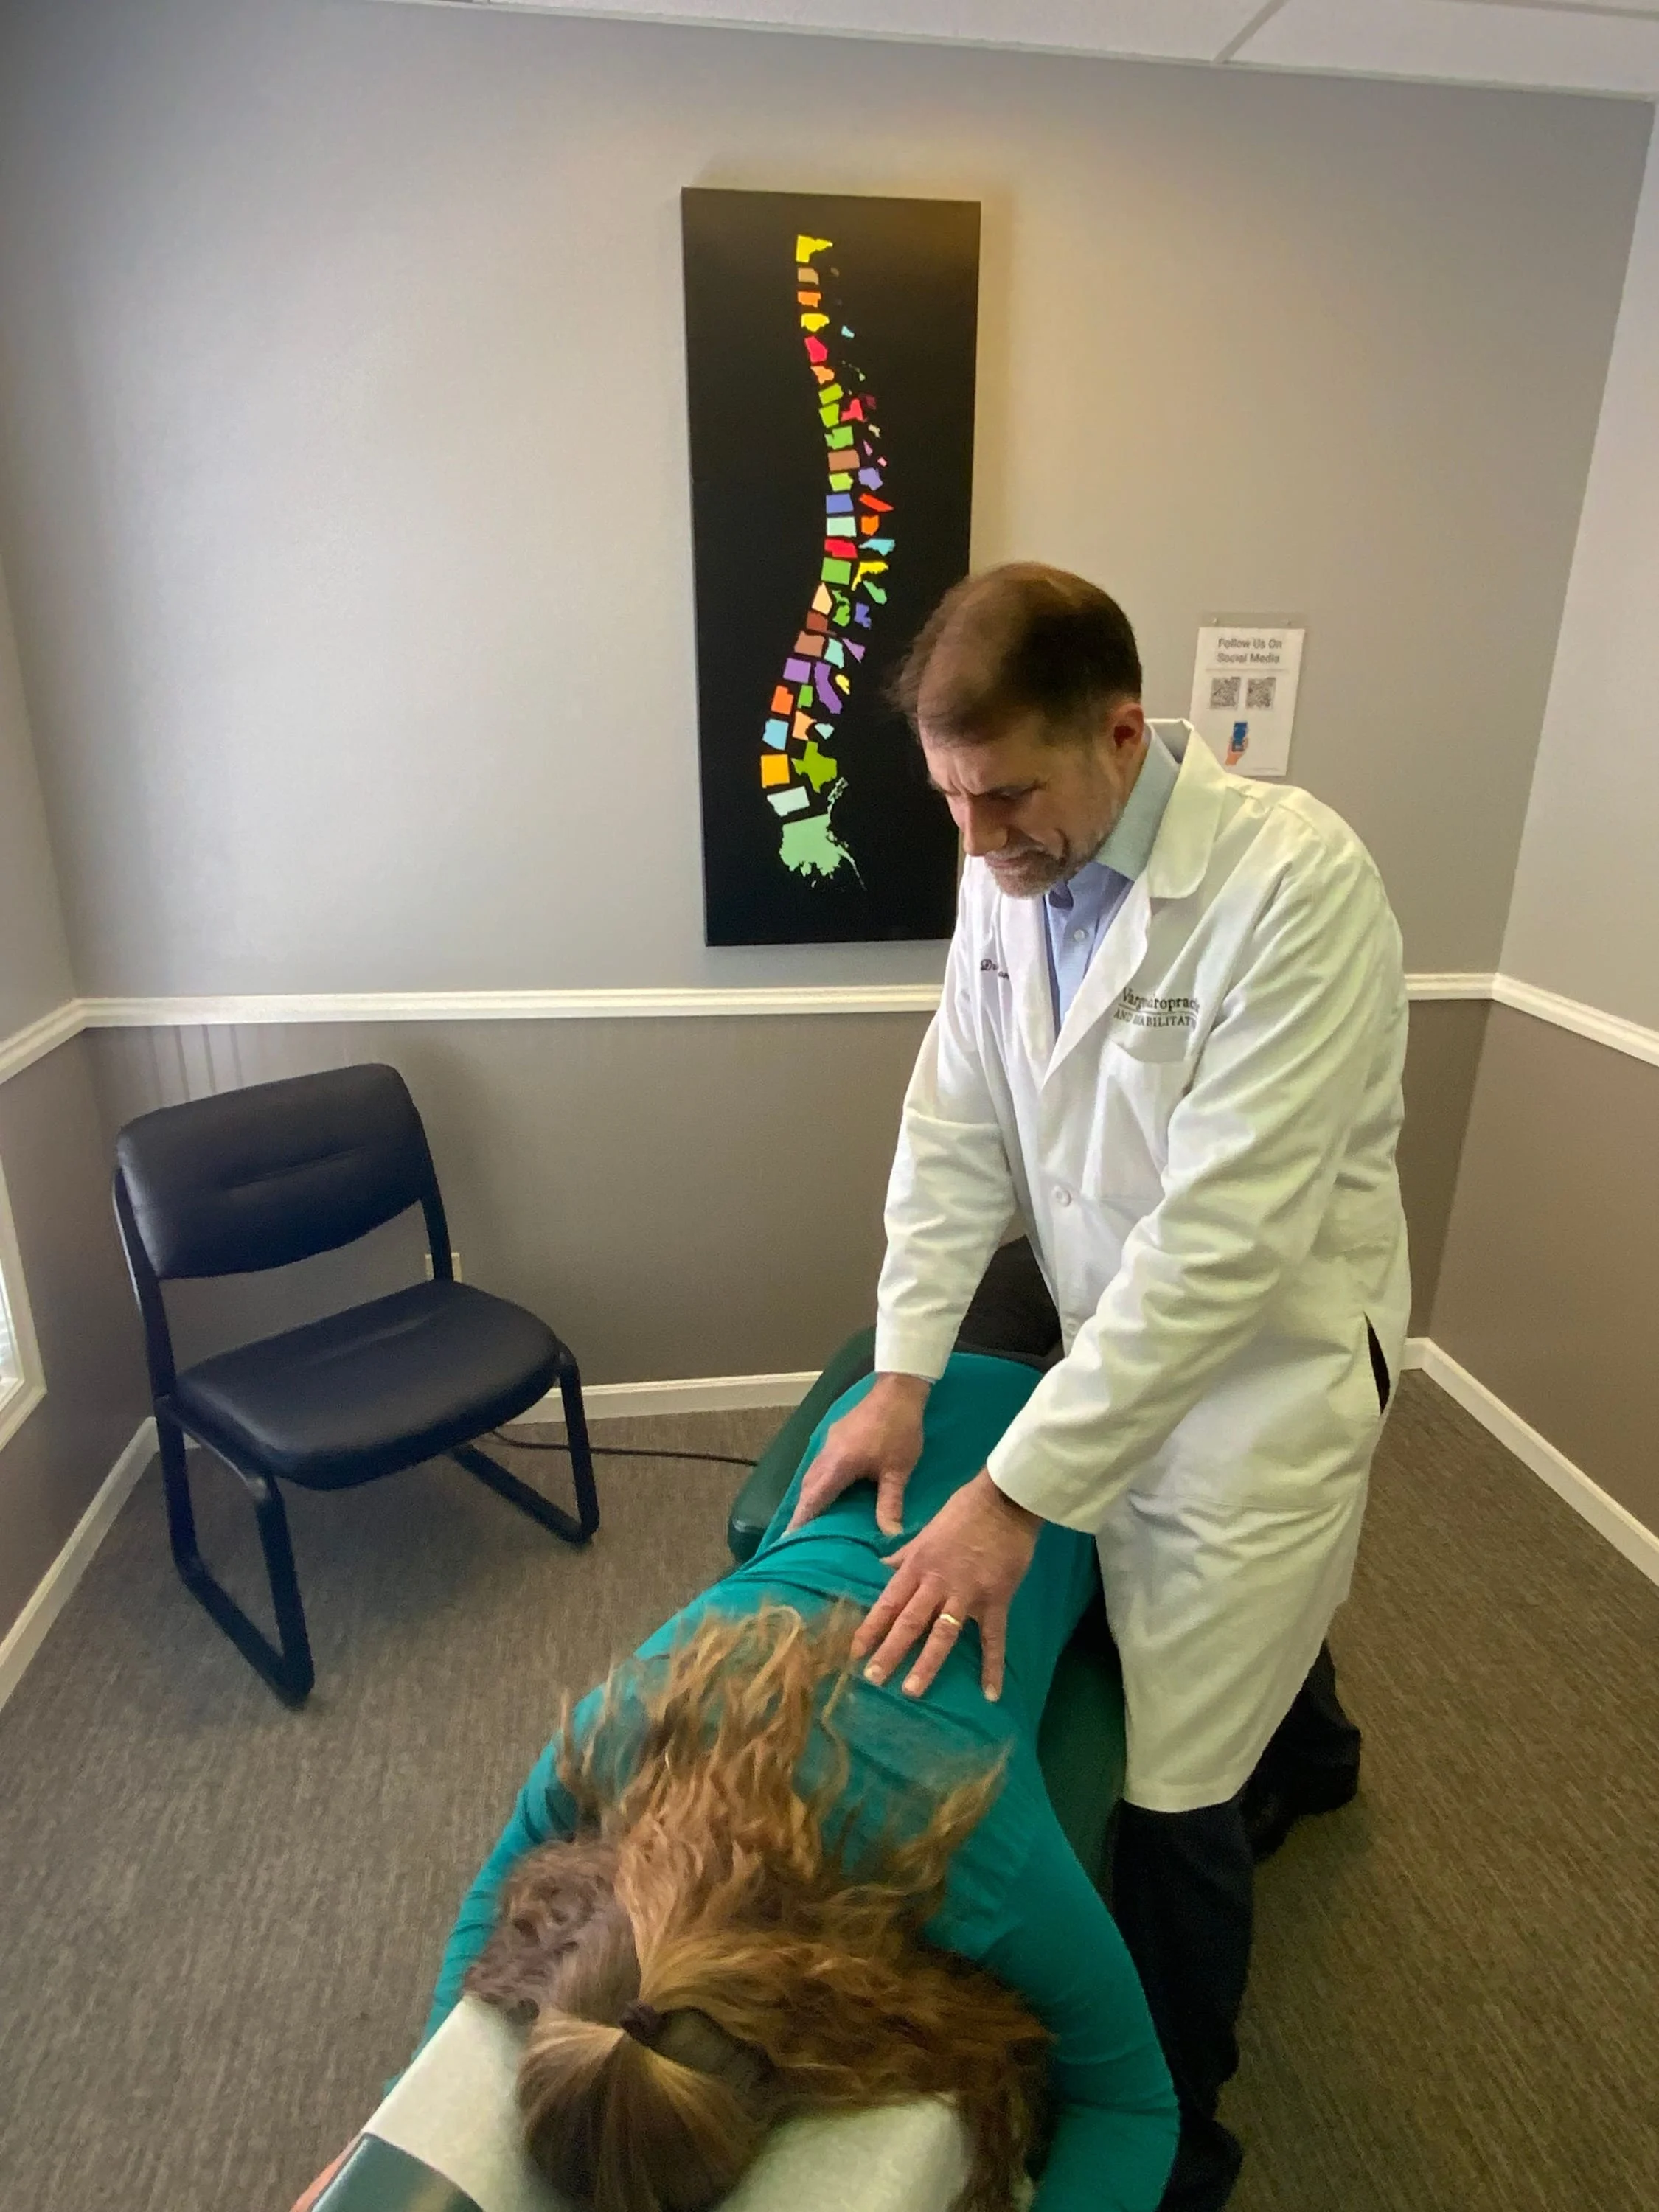 Chiropractor Adjusting a patient